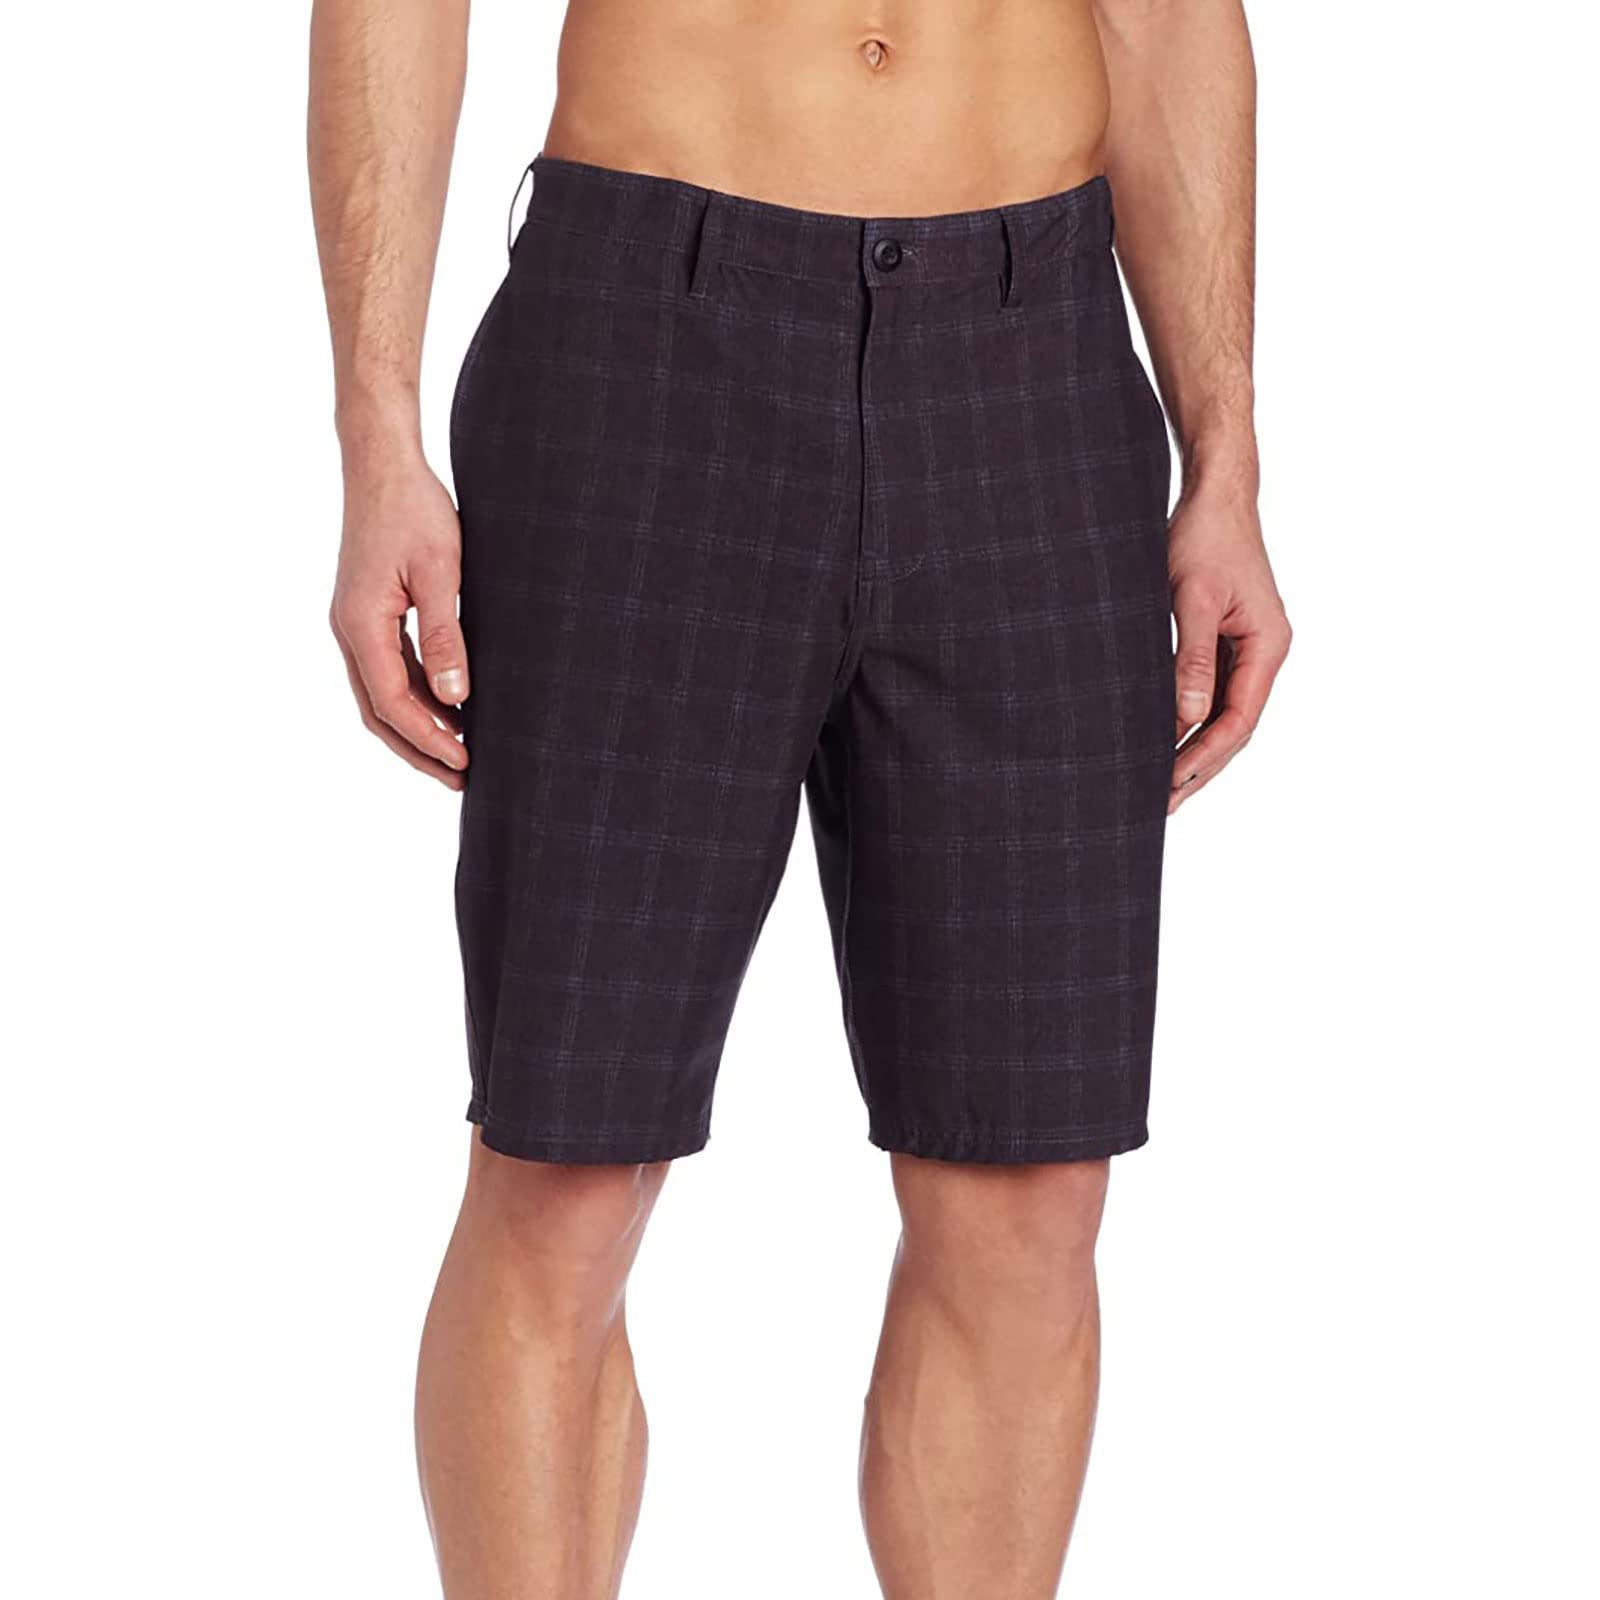 DC Gilfred Hybrid Men's Walkshort Shorts - Black Storm Print